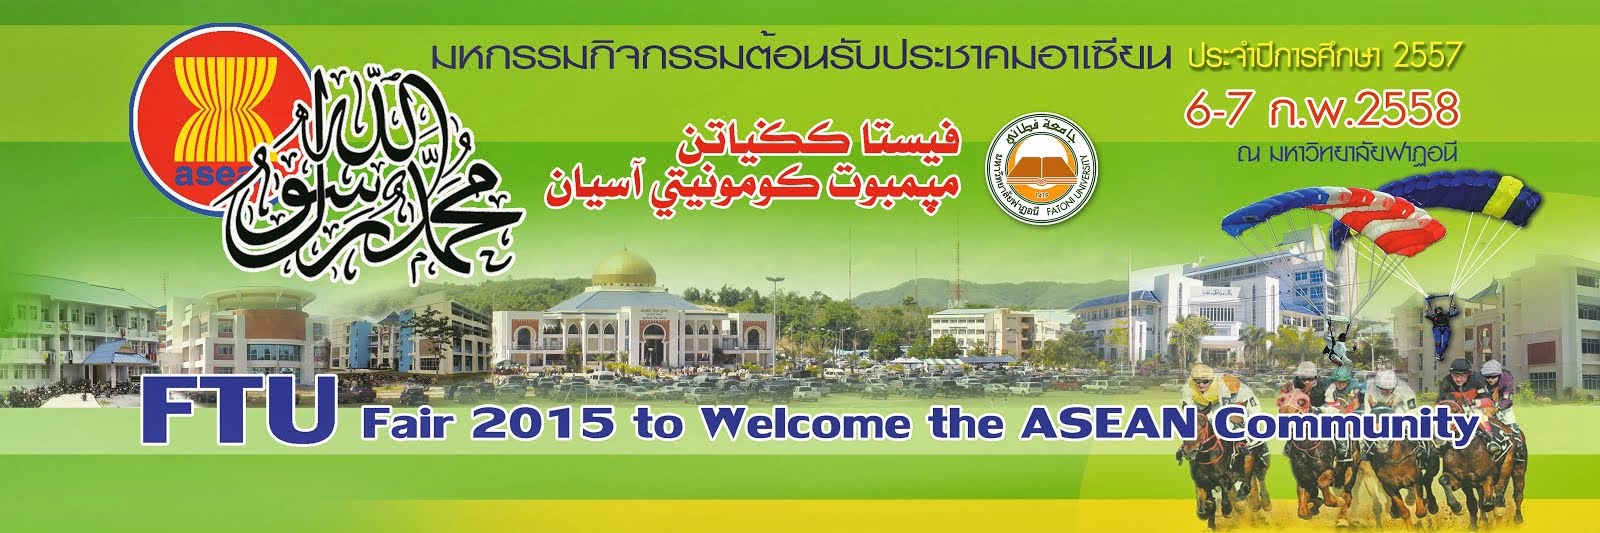 FTU Fair 2015 to Welcome the ASEAN Community